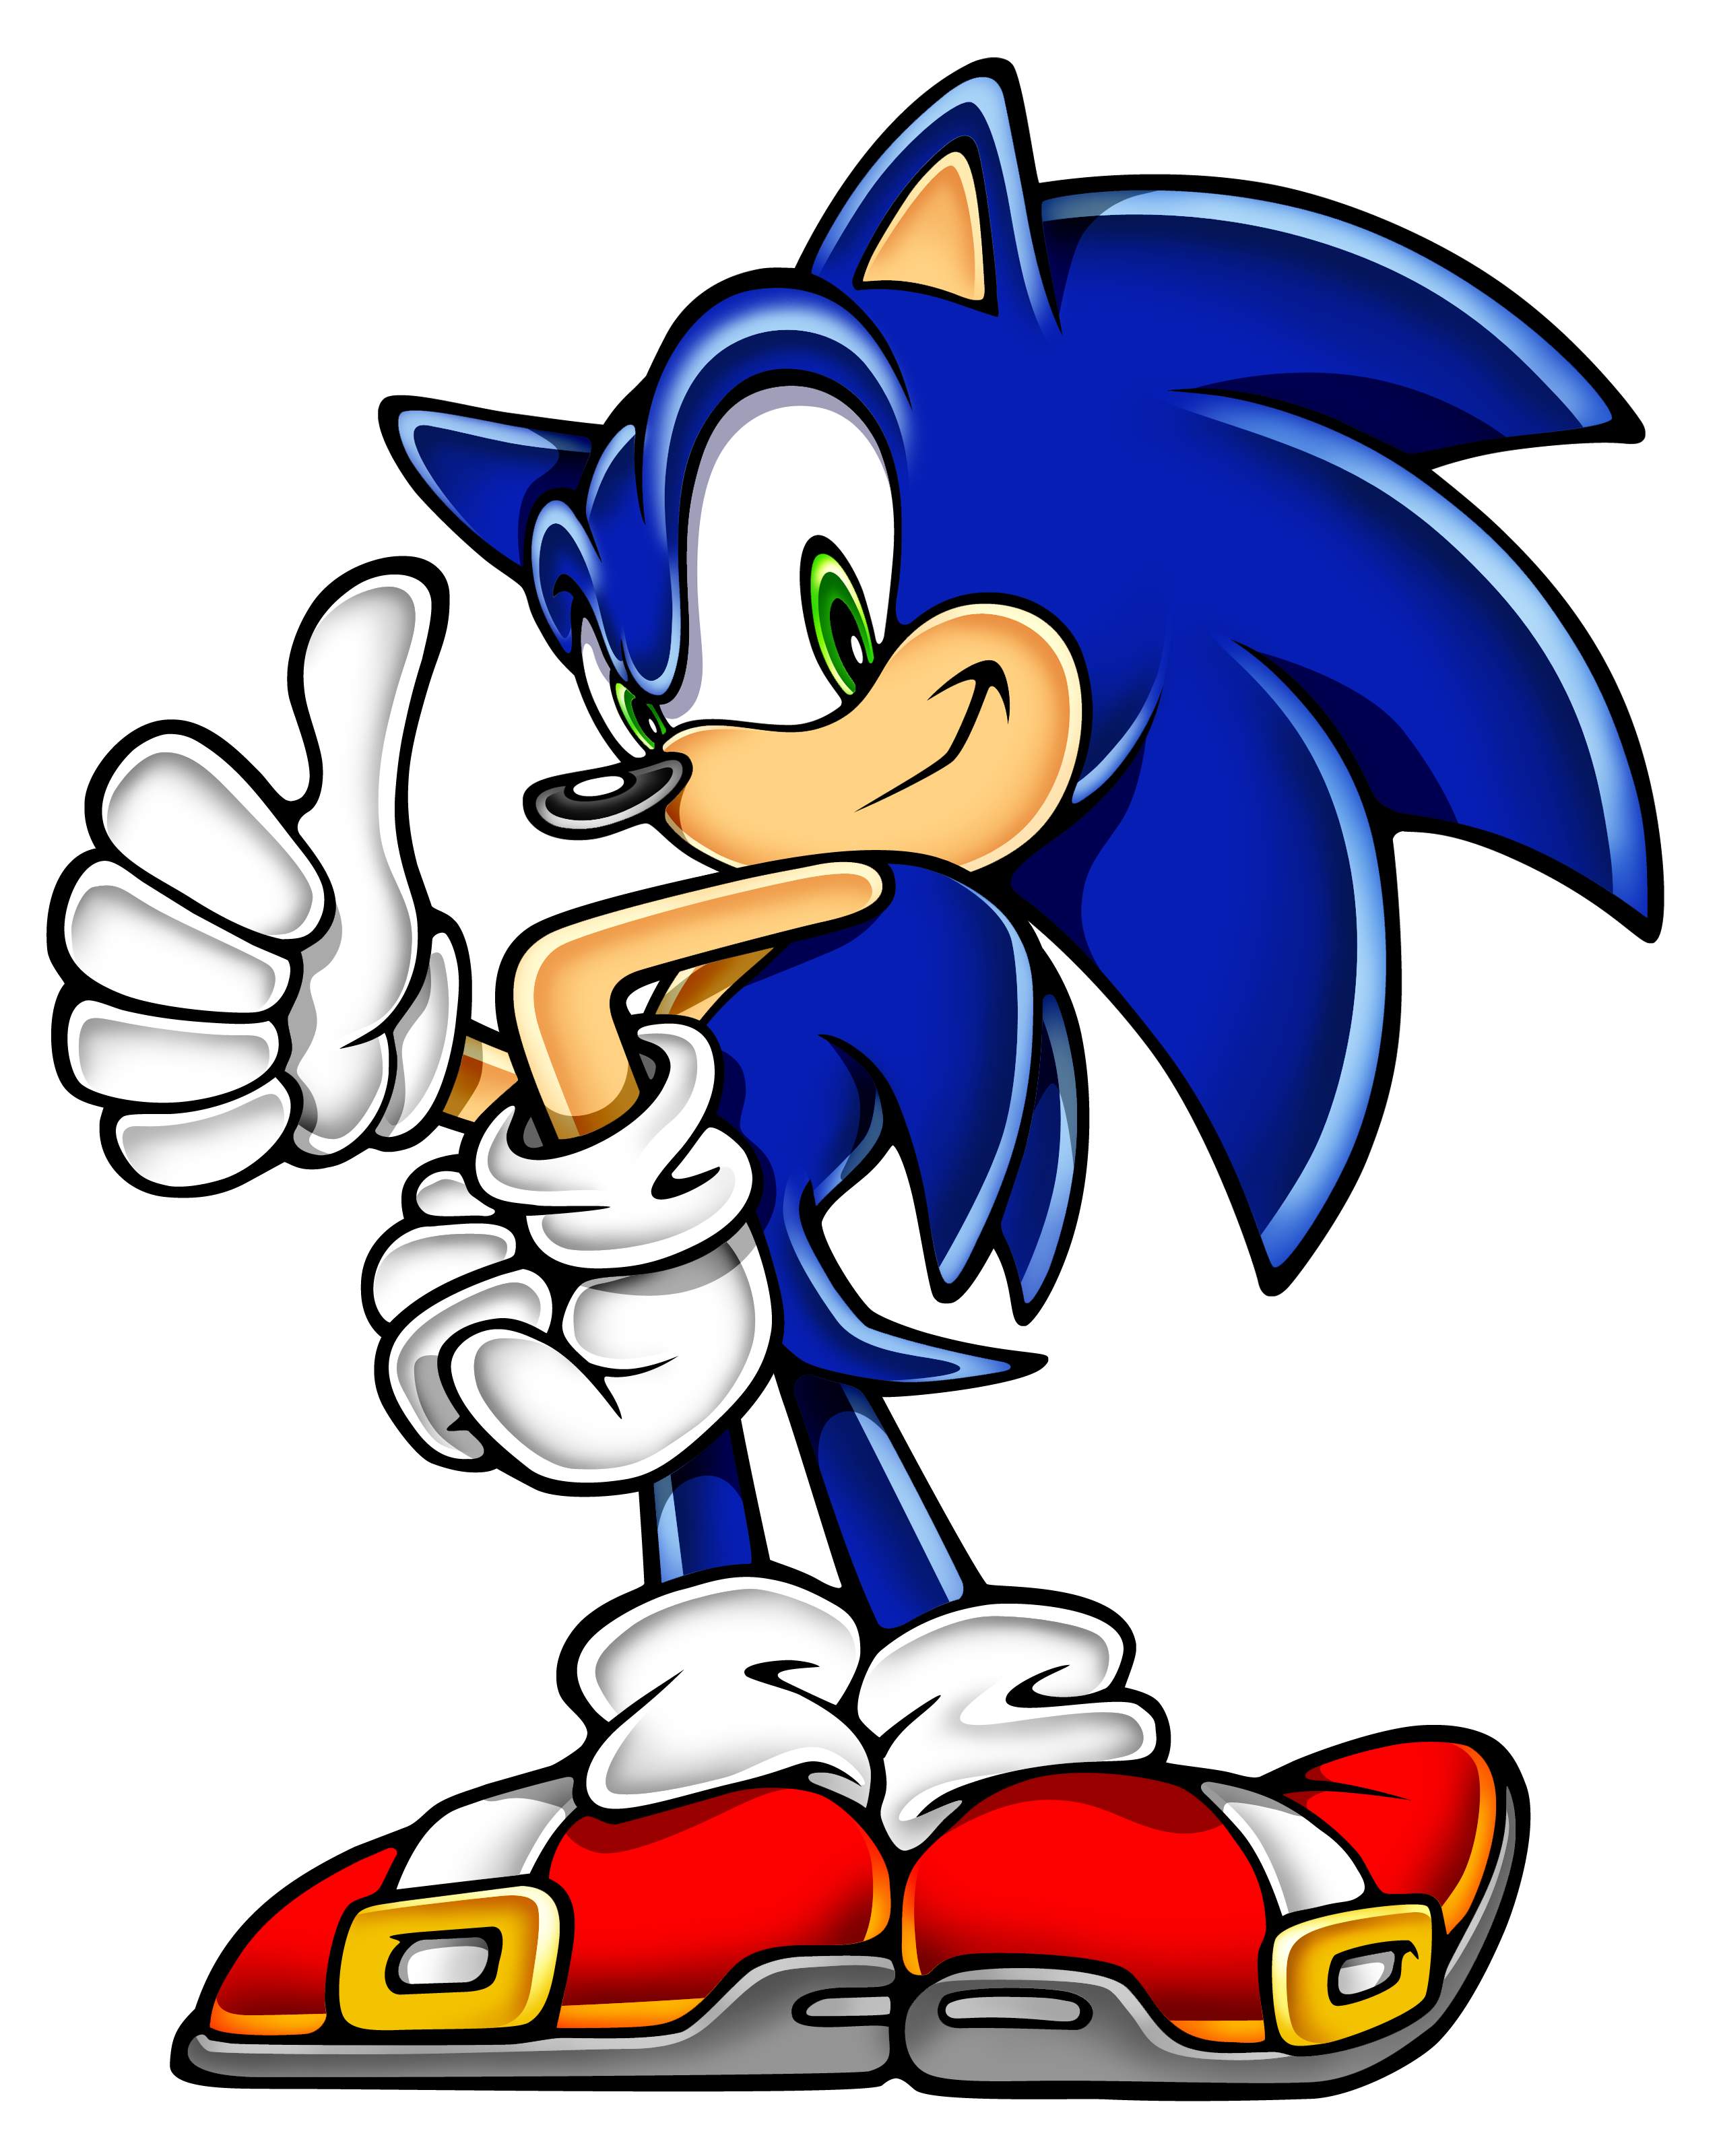 SEGA Dan Playstation Akan Berkolaborasi Sonic Akan Hadir Di